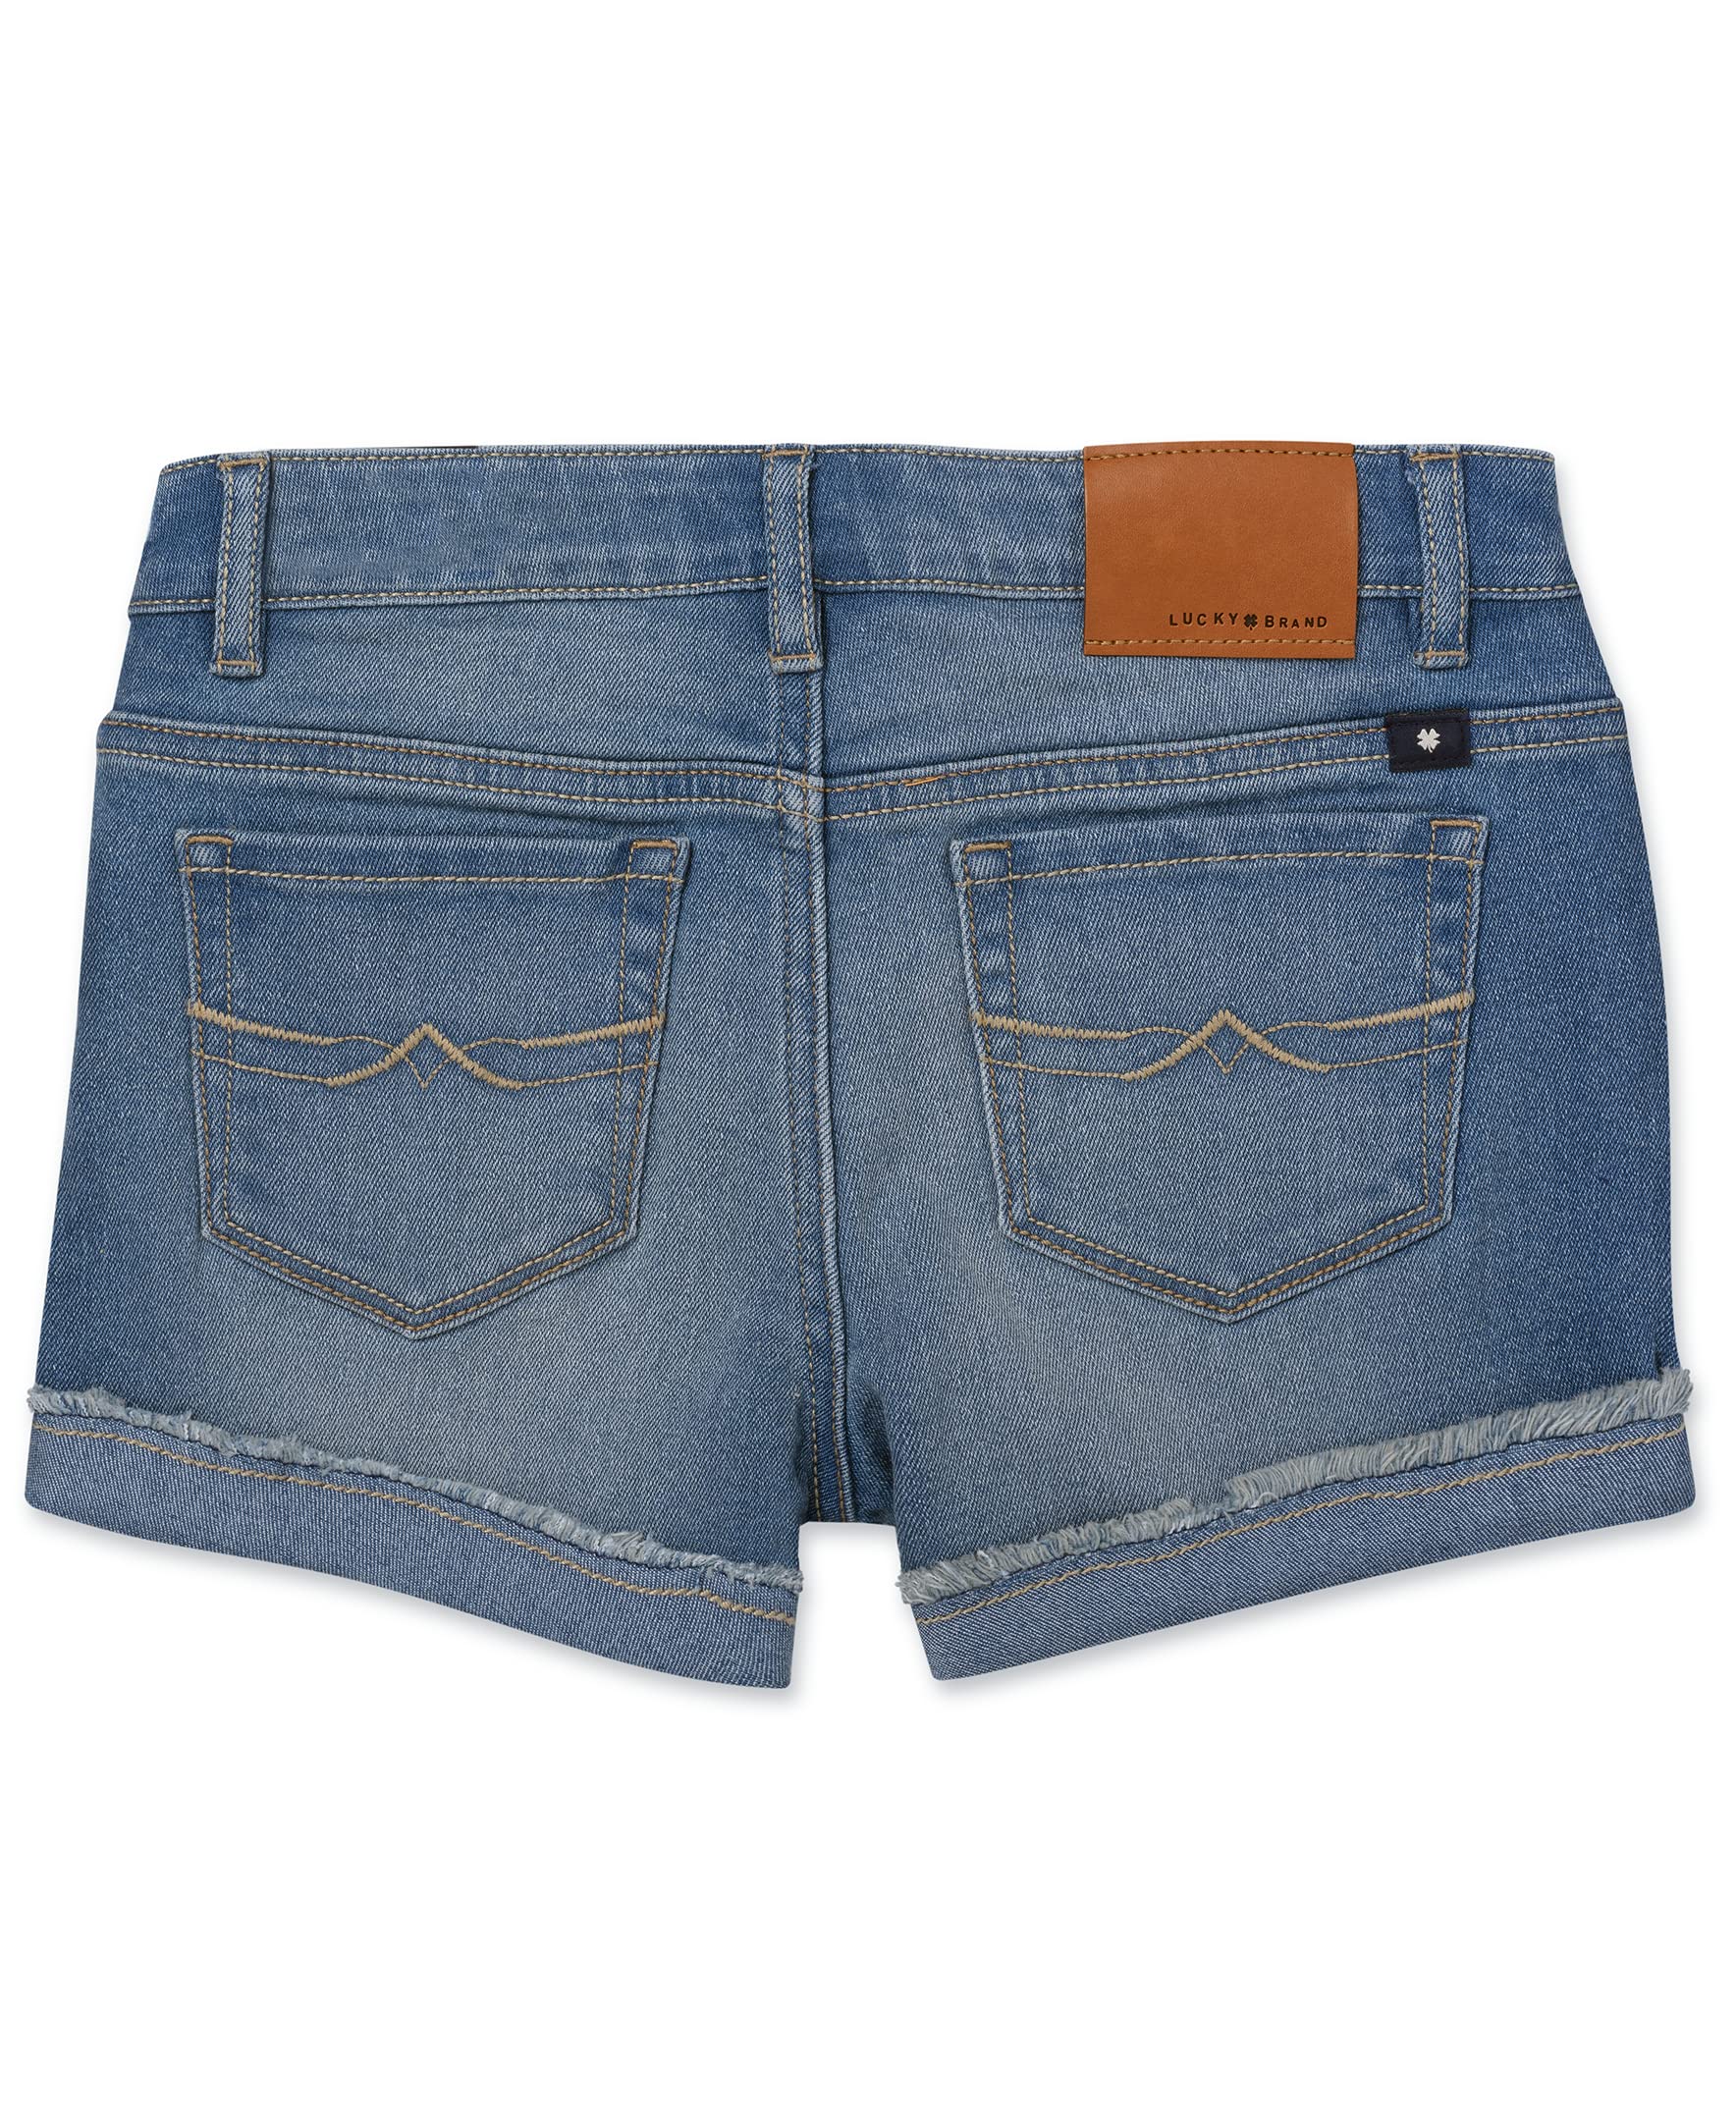 Lucky Brand Girls' 5-Pocket Cuffed Stretch Denim Shorts